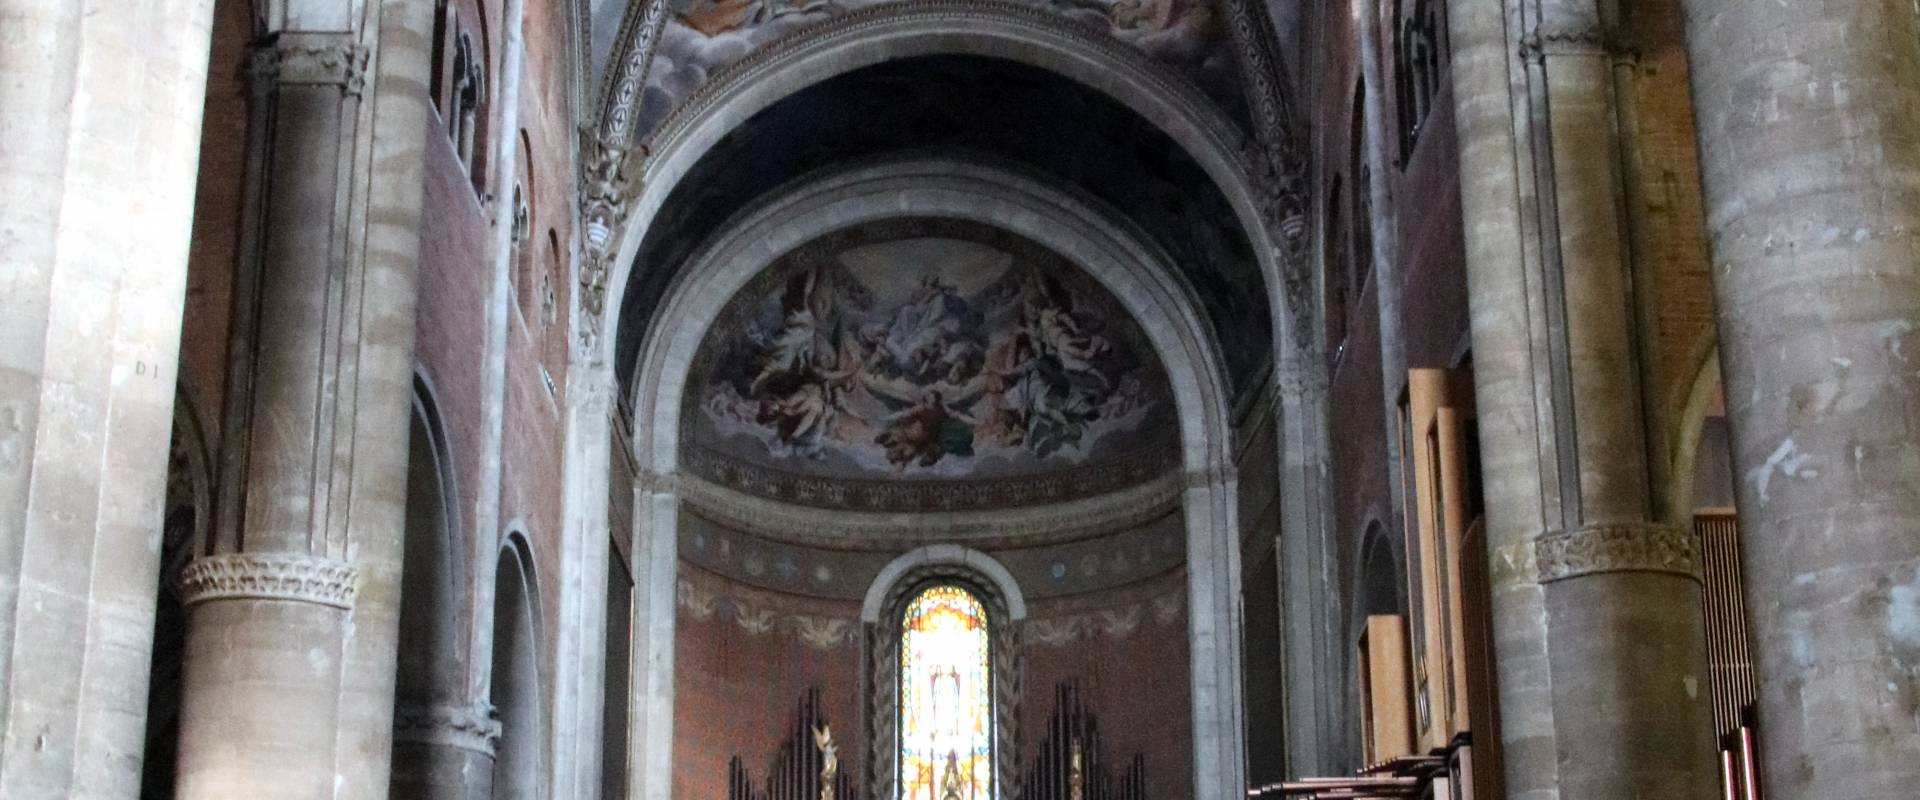 Duomo (Piacenza), interno 27 foto di Mongolo1984